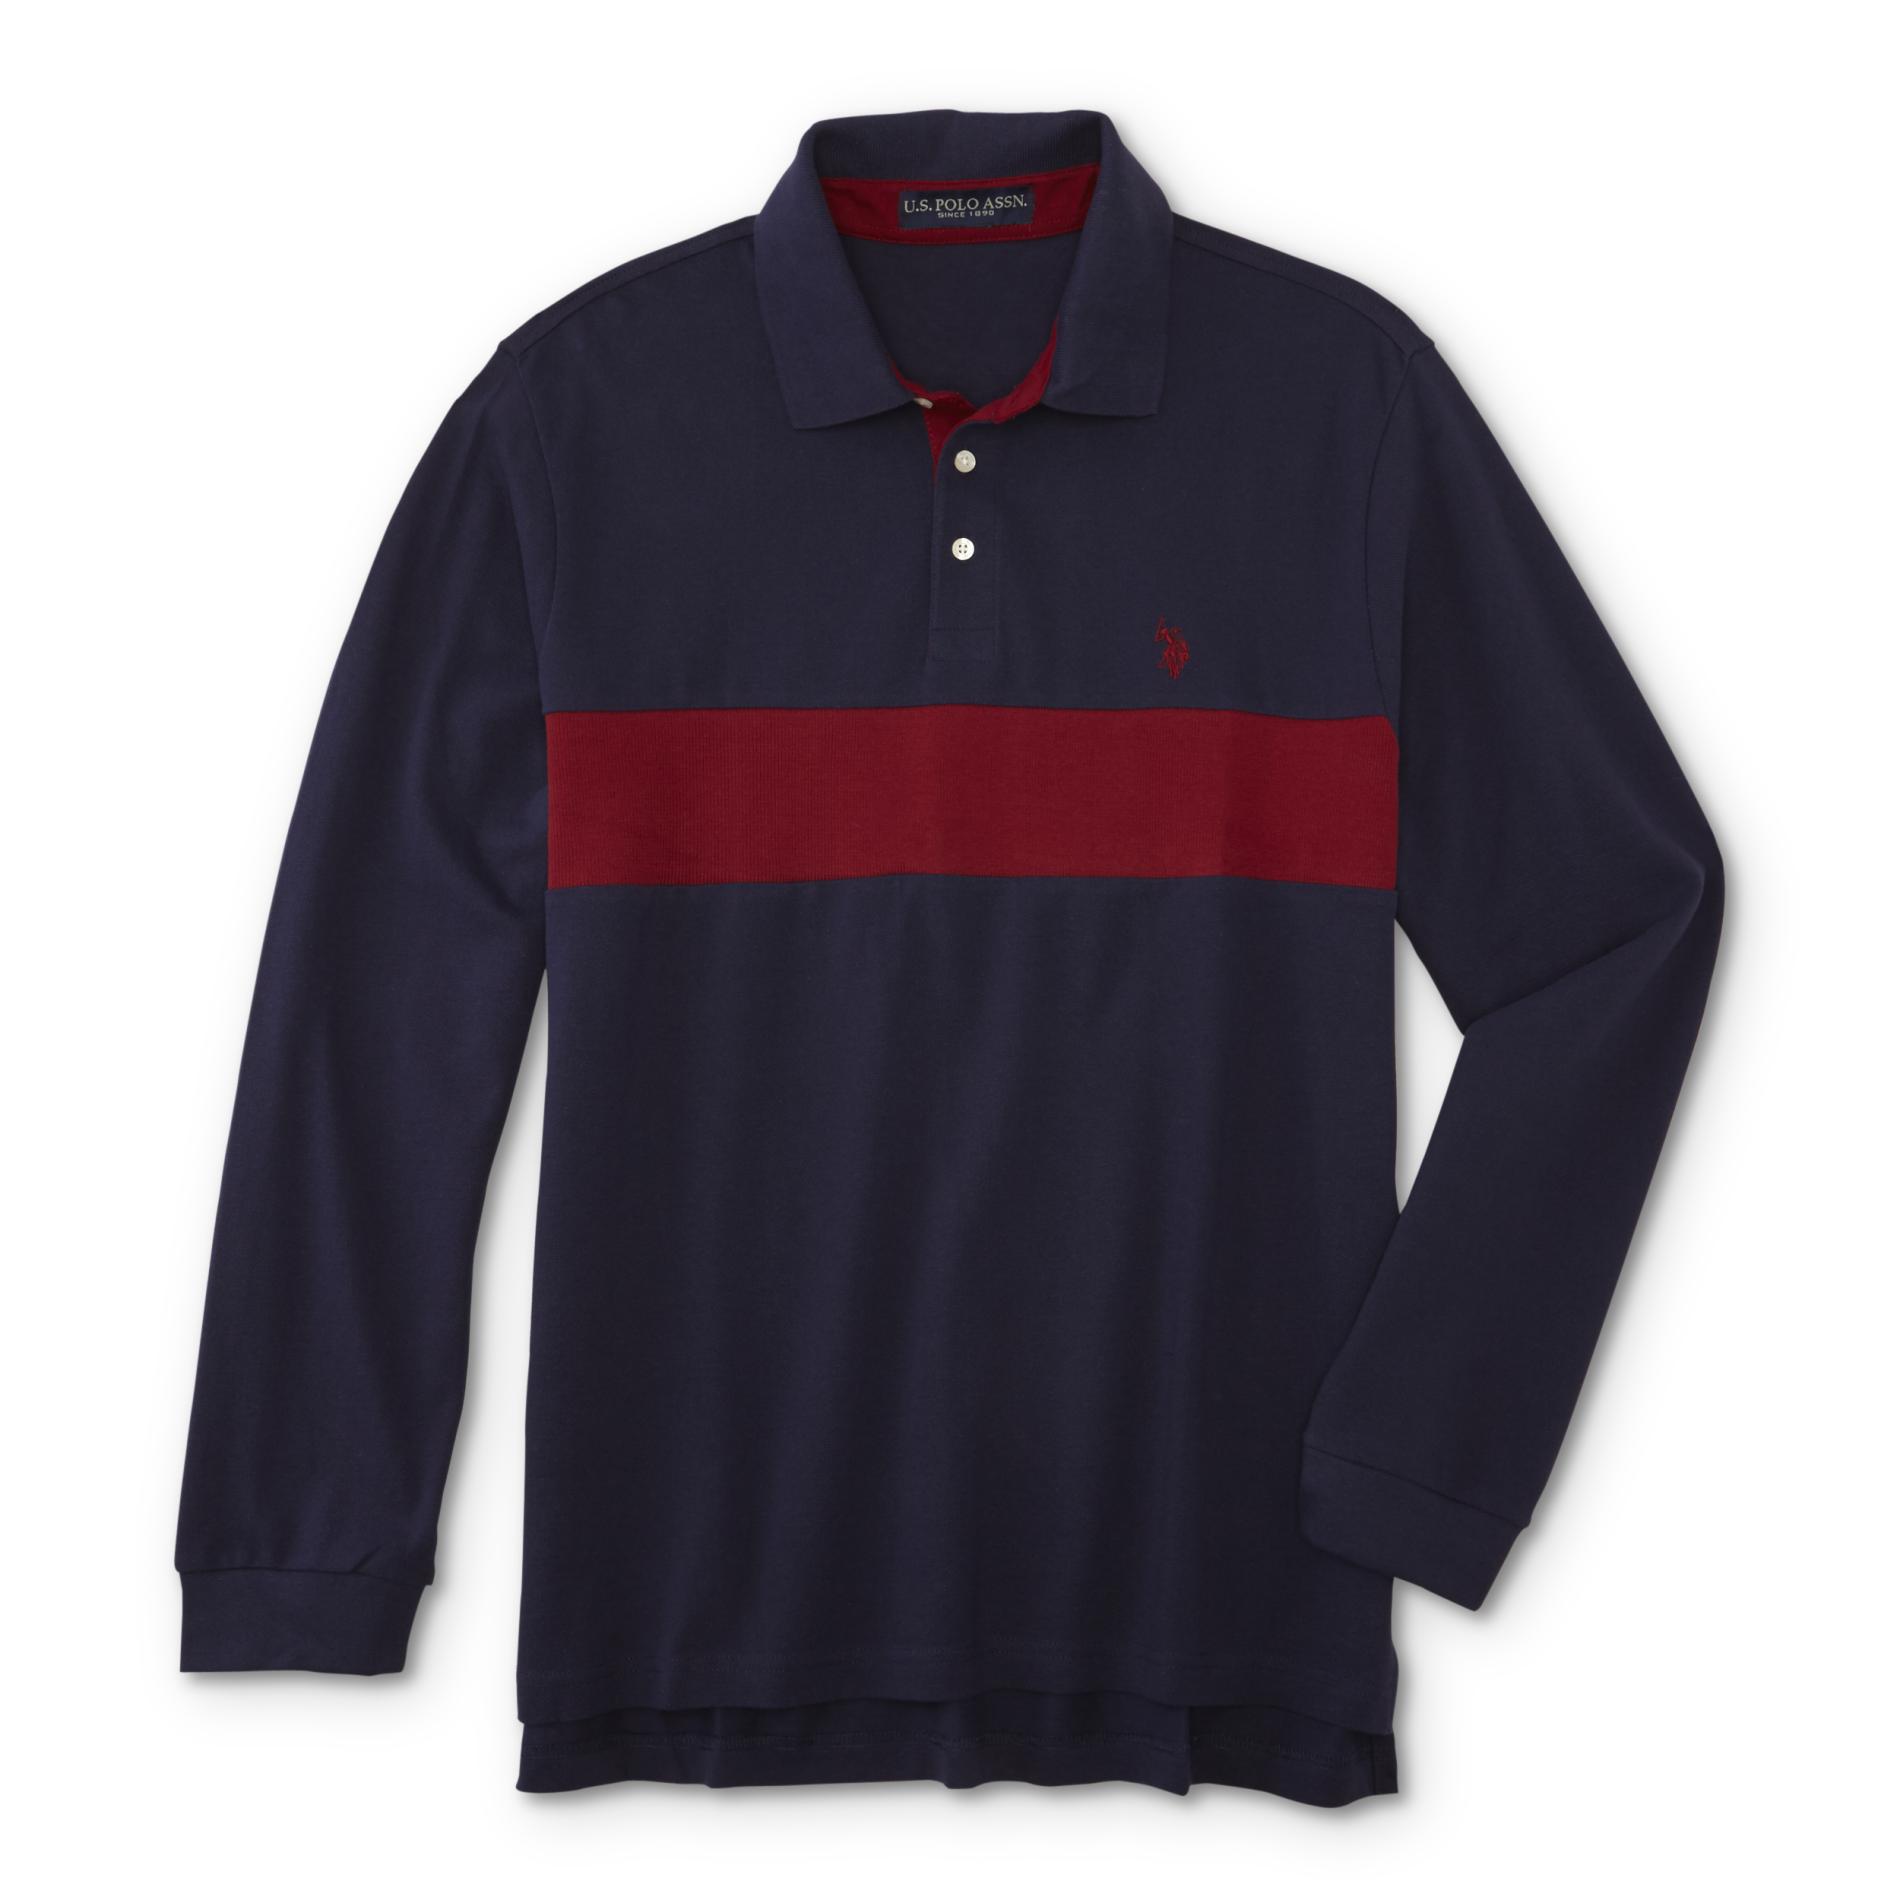 Jordache Men's Long-Sleeve Polo Shirt - Colorblock